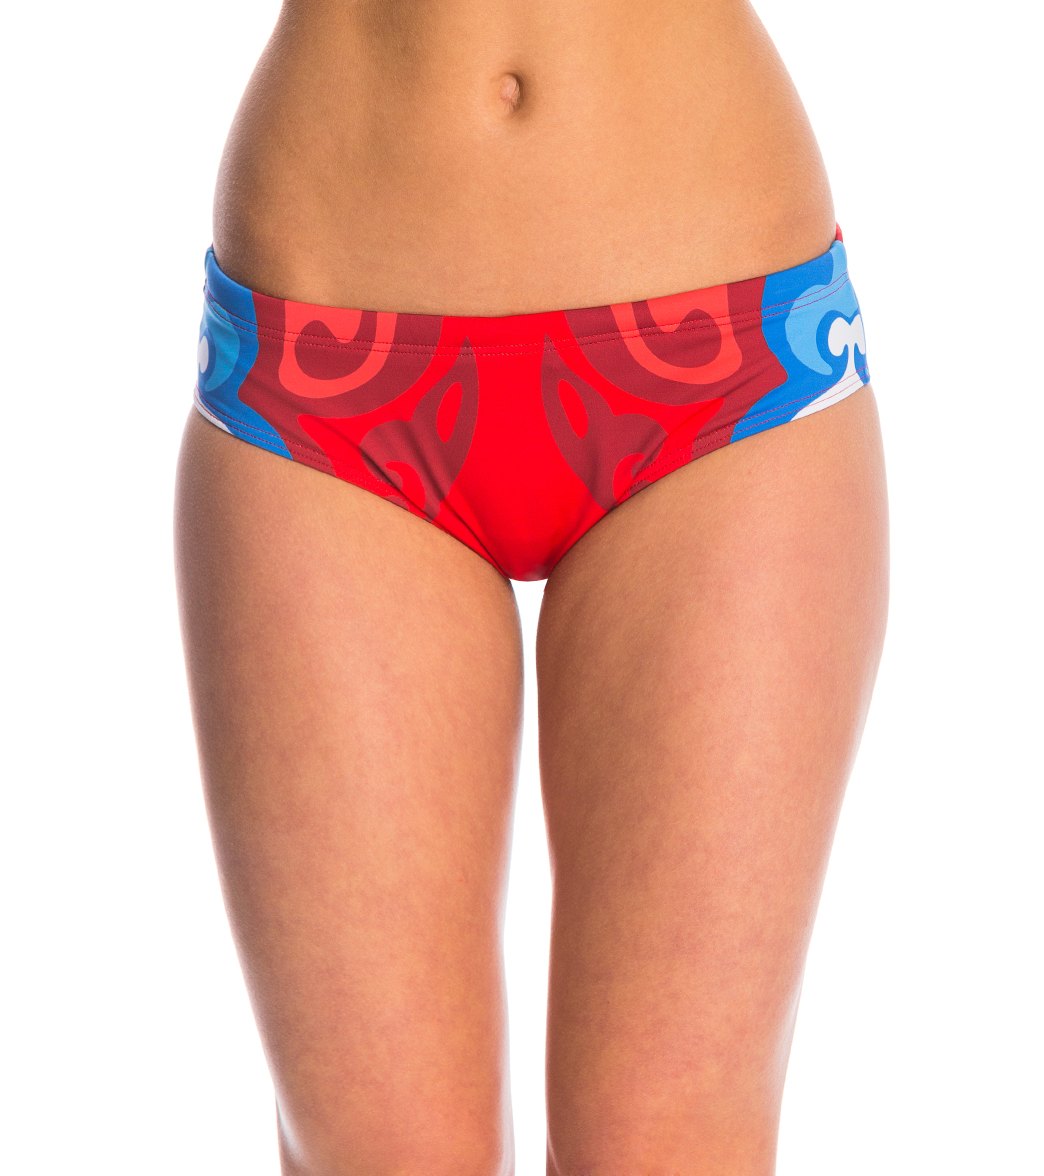 Triflare Women's Usa Beauty Sport Bikini Bottom - Red/White/Blue X-Small - Swimoutlet.com